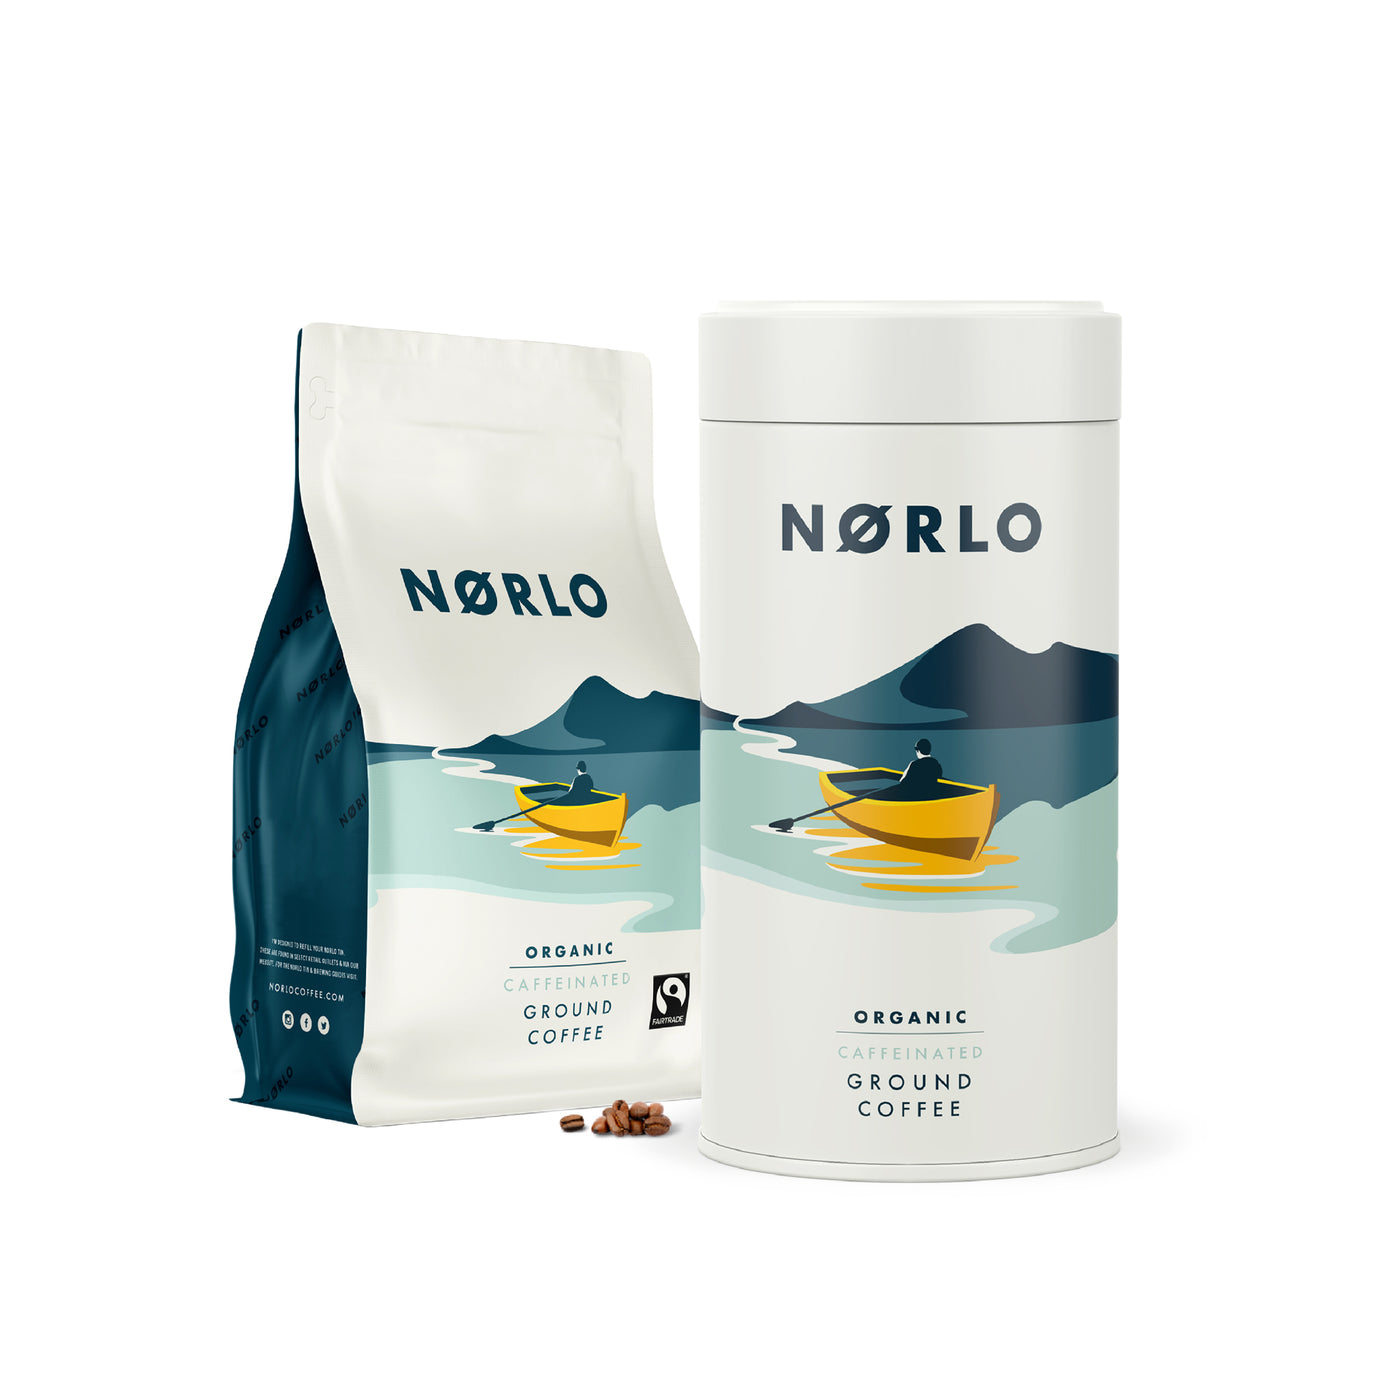 The Norlo Coffee Subscription